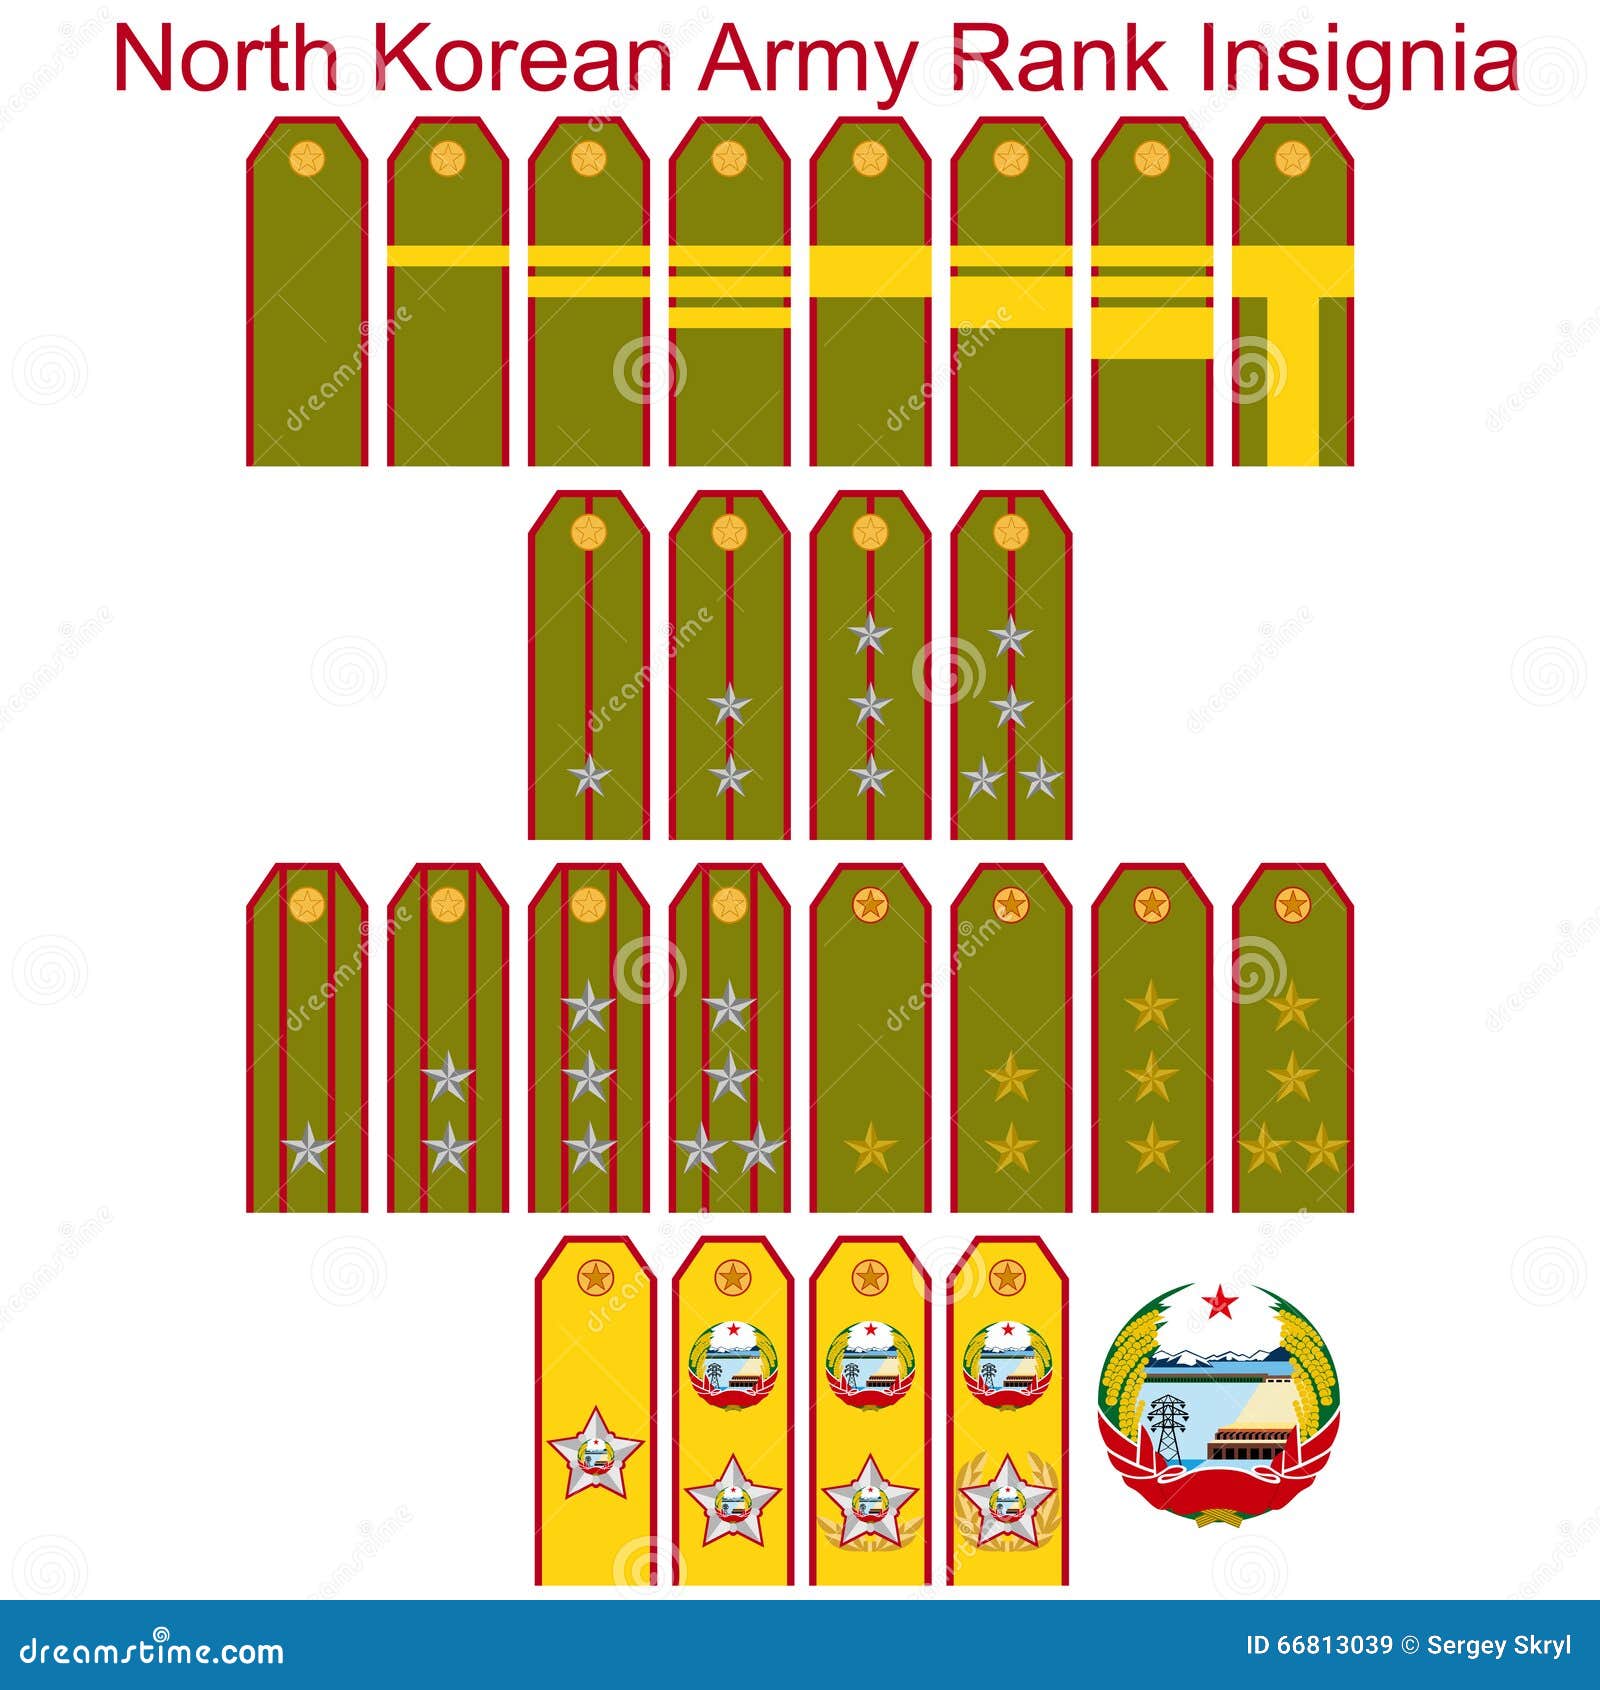 South Korean Army Rank Insignia